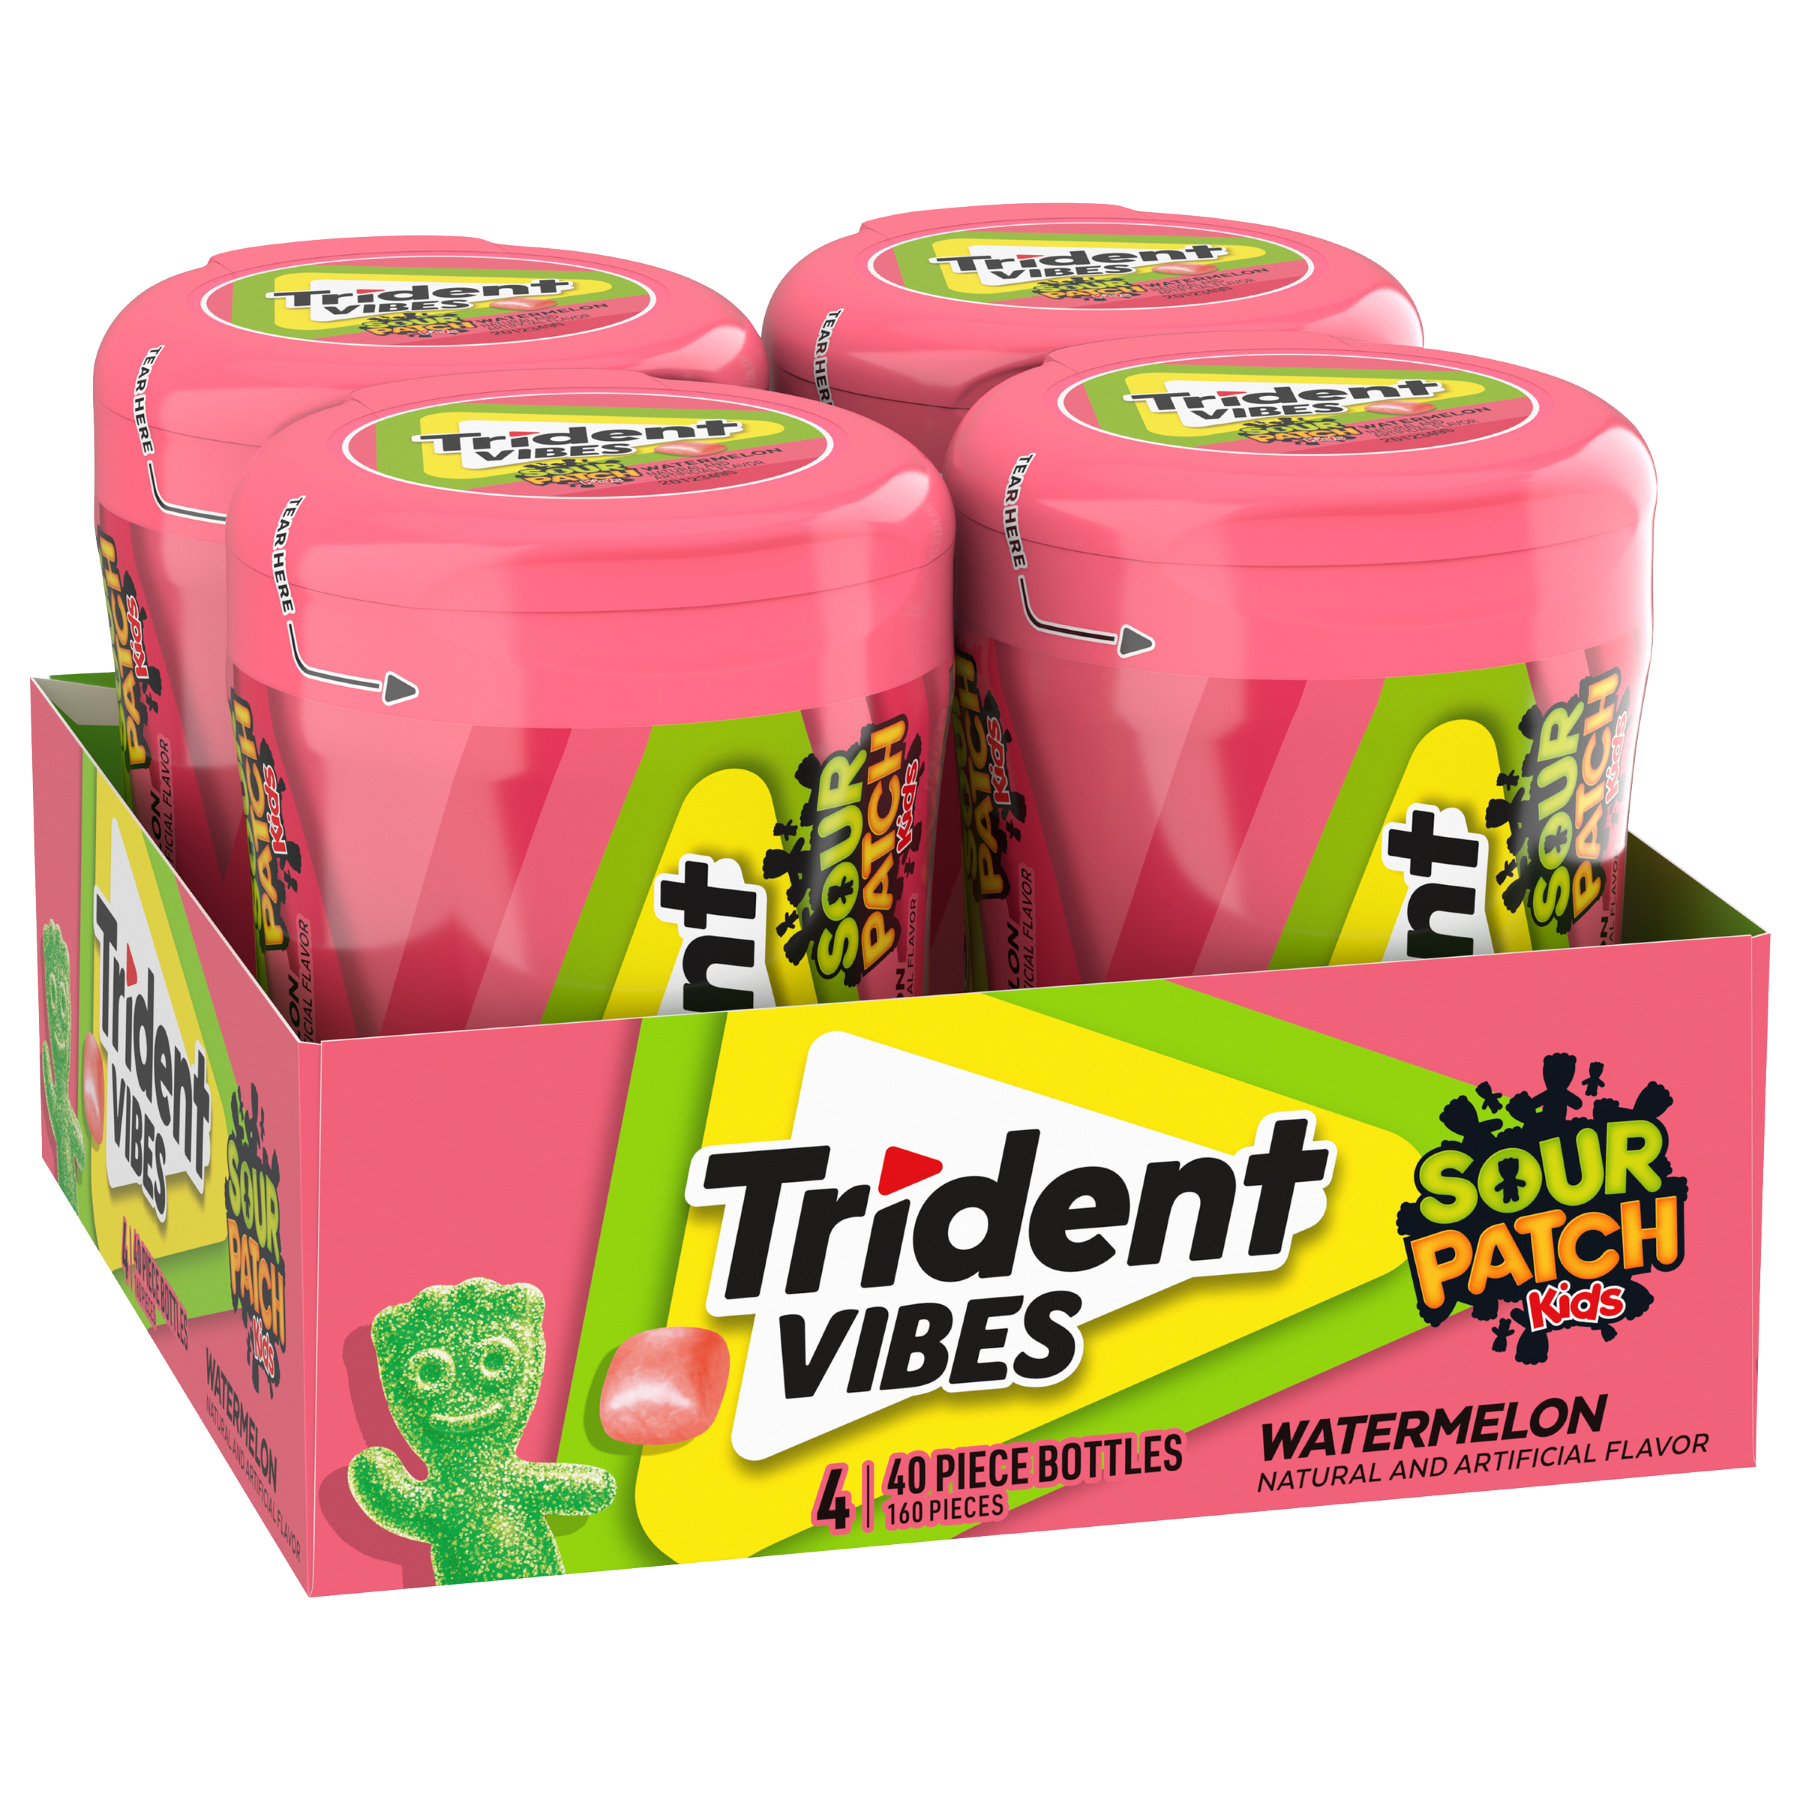 Trident vibes sour patch kids watermelon 40pc 4ct